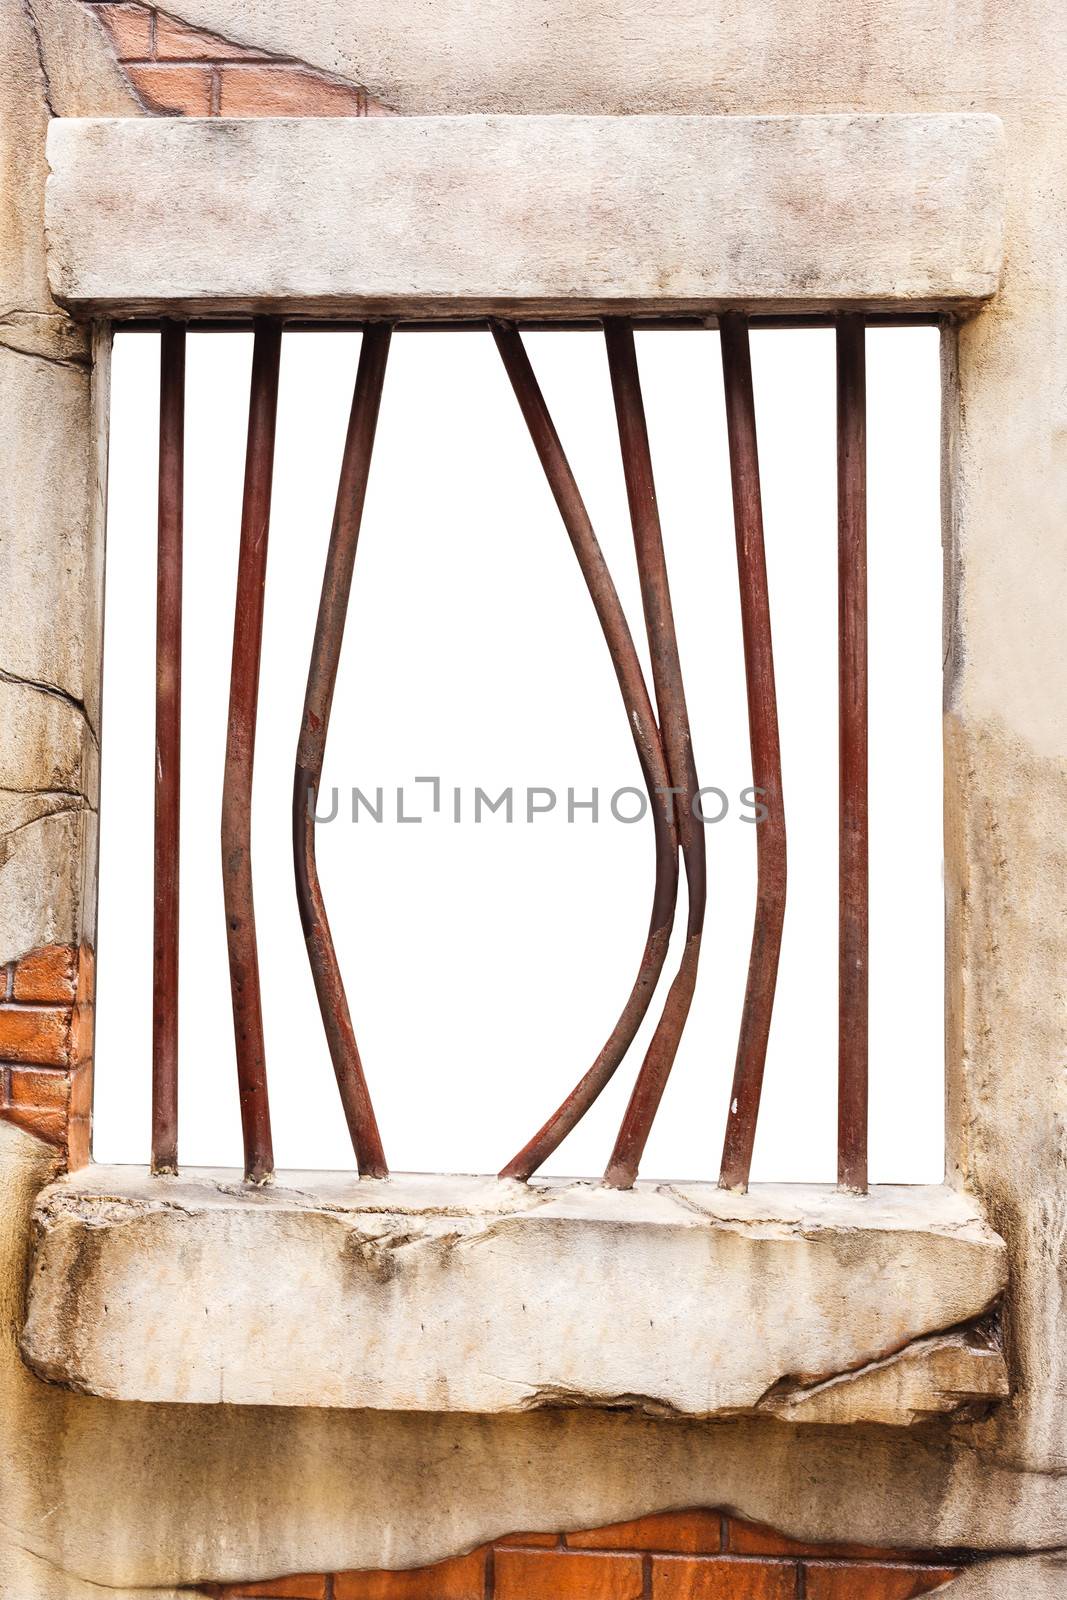 jail window on brick wall, white background